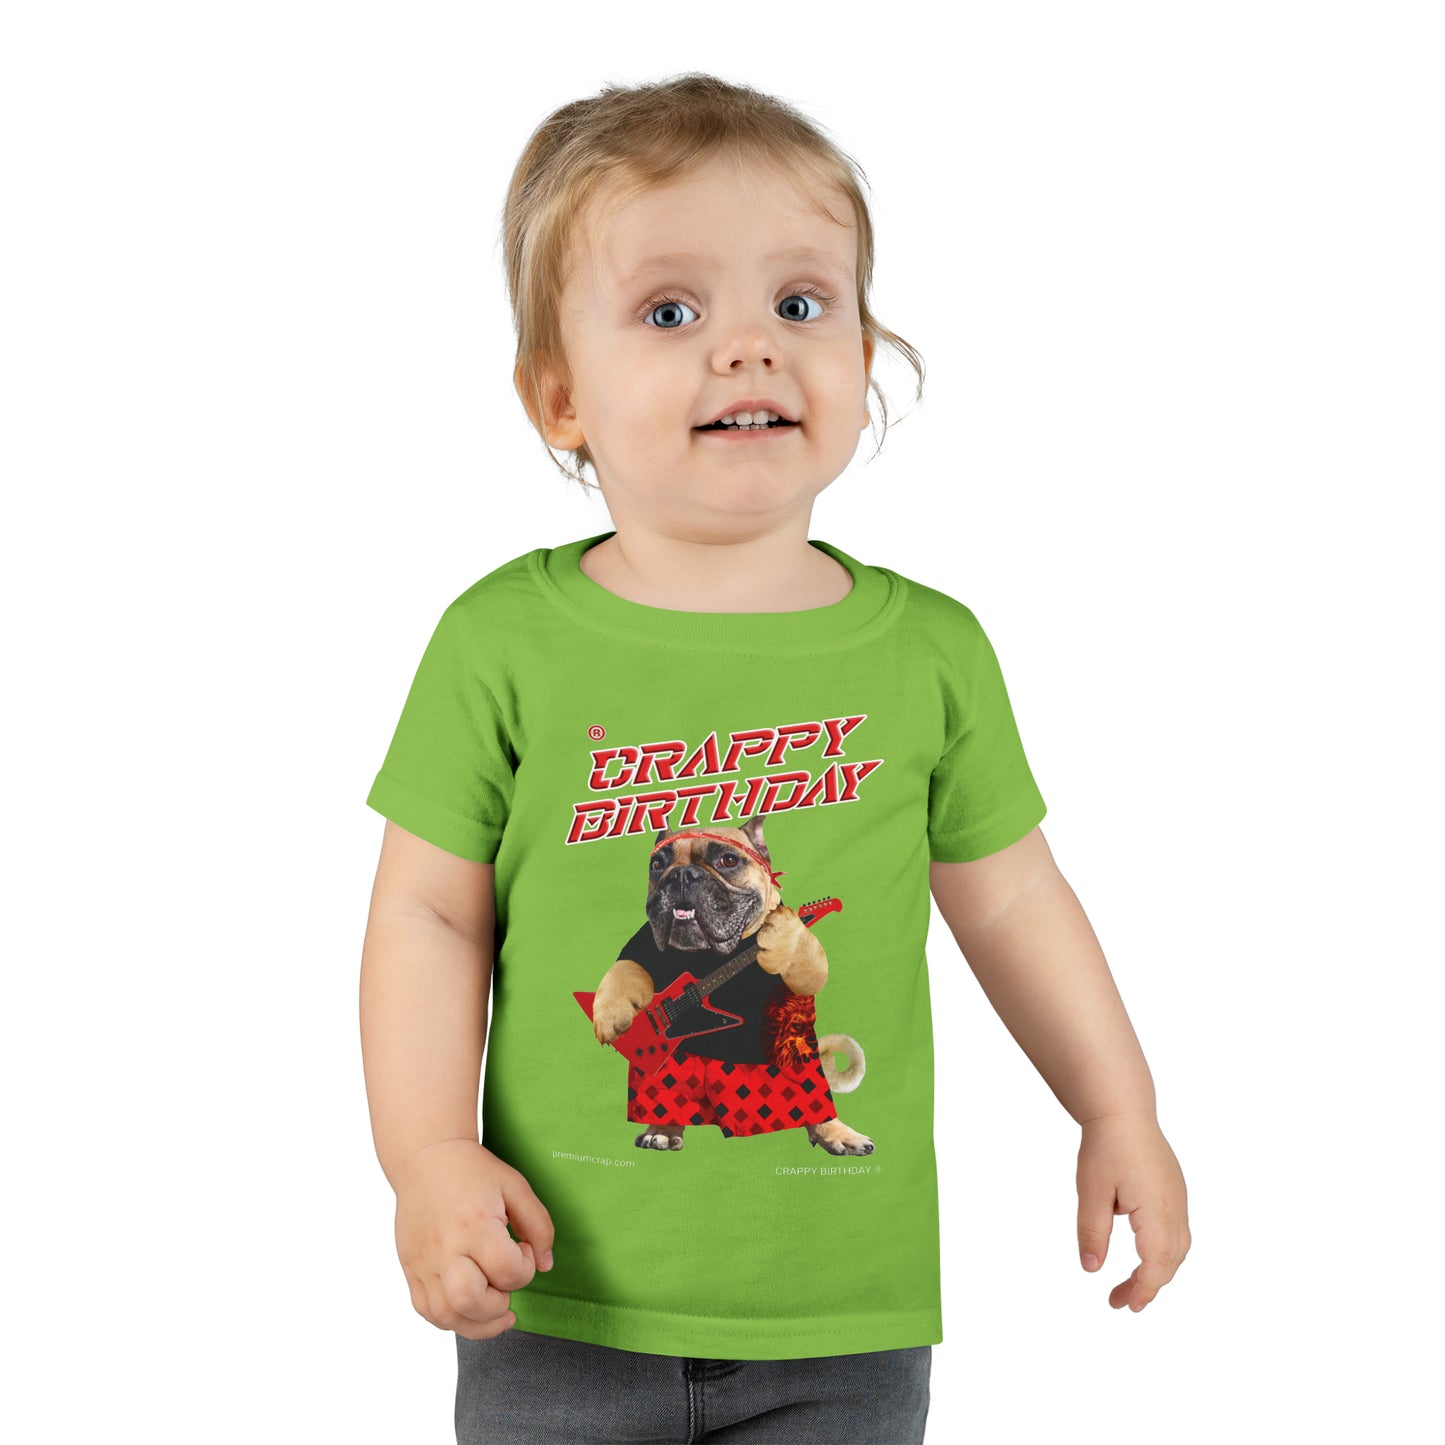 Crappy Birthday II Toddler T-shirt